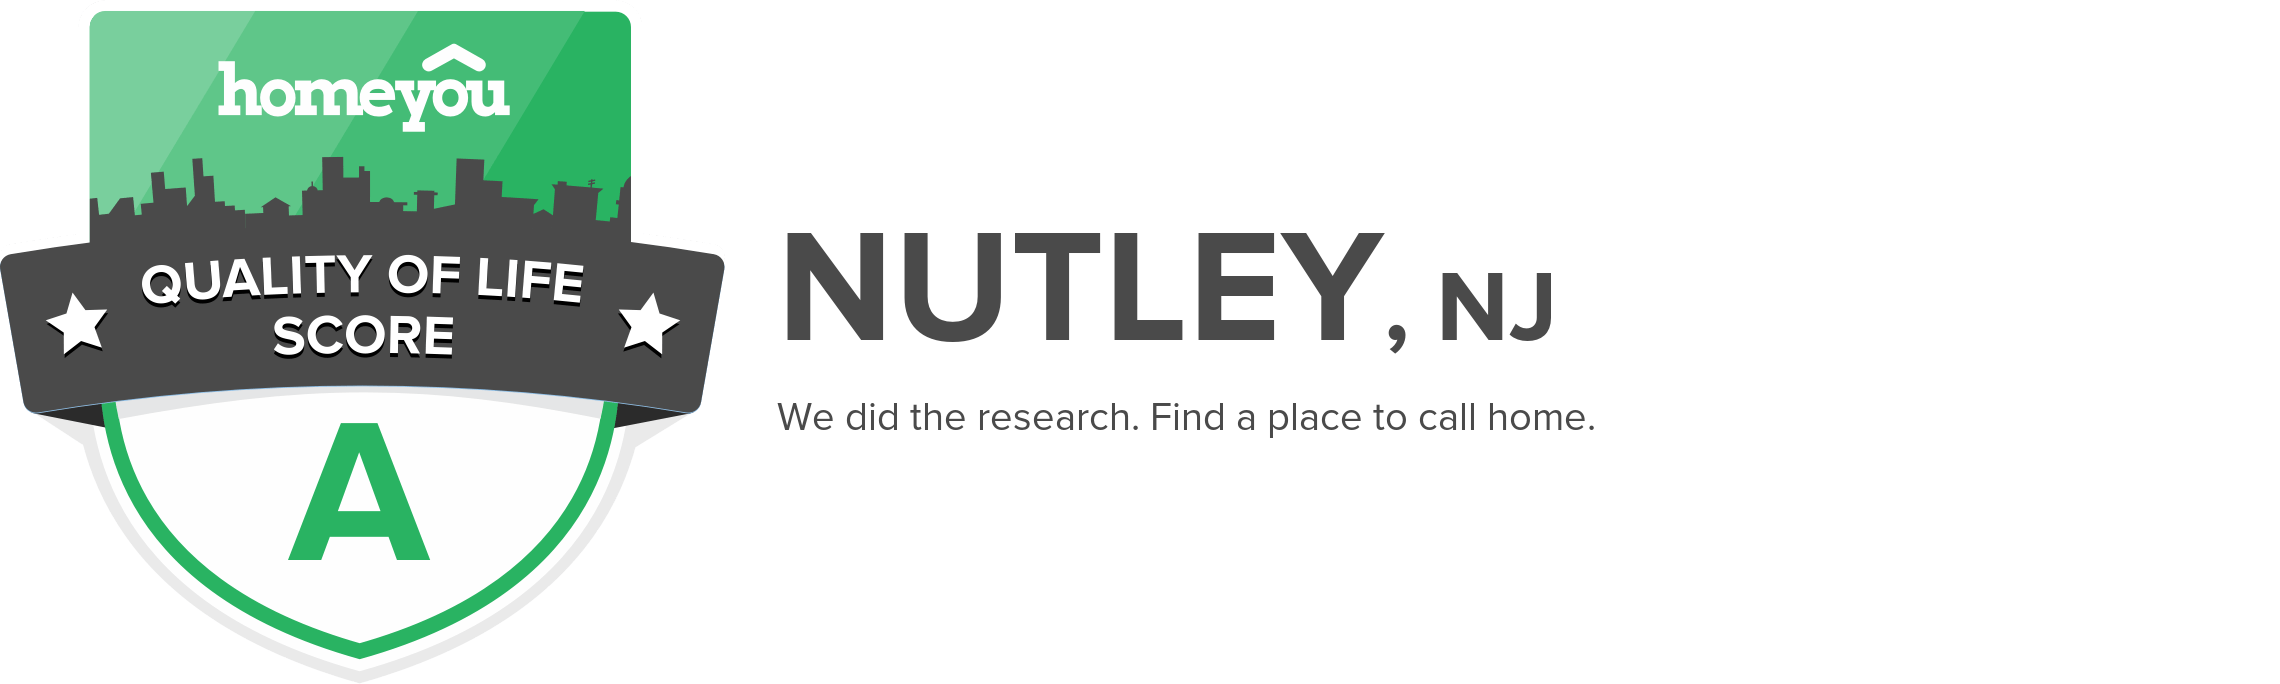 Nutley, NJ